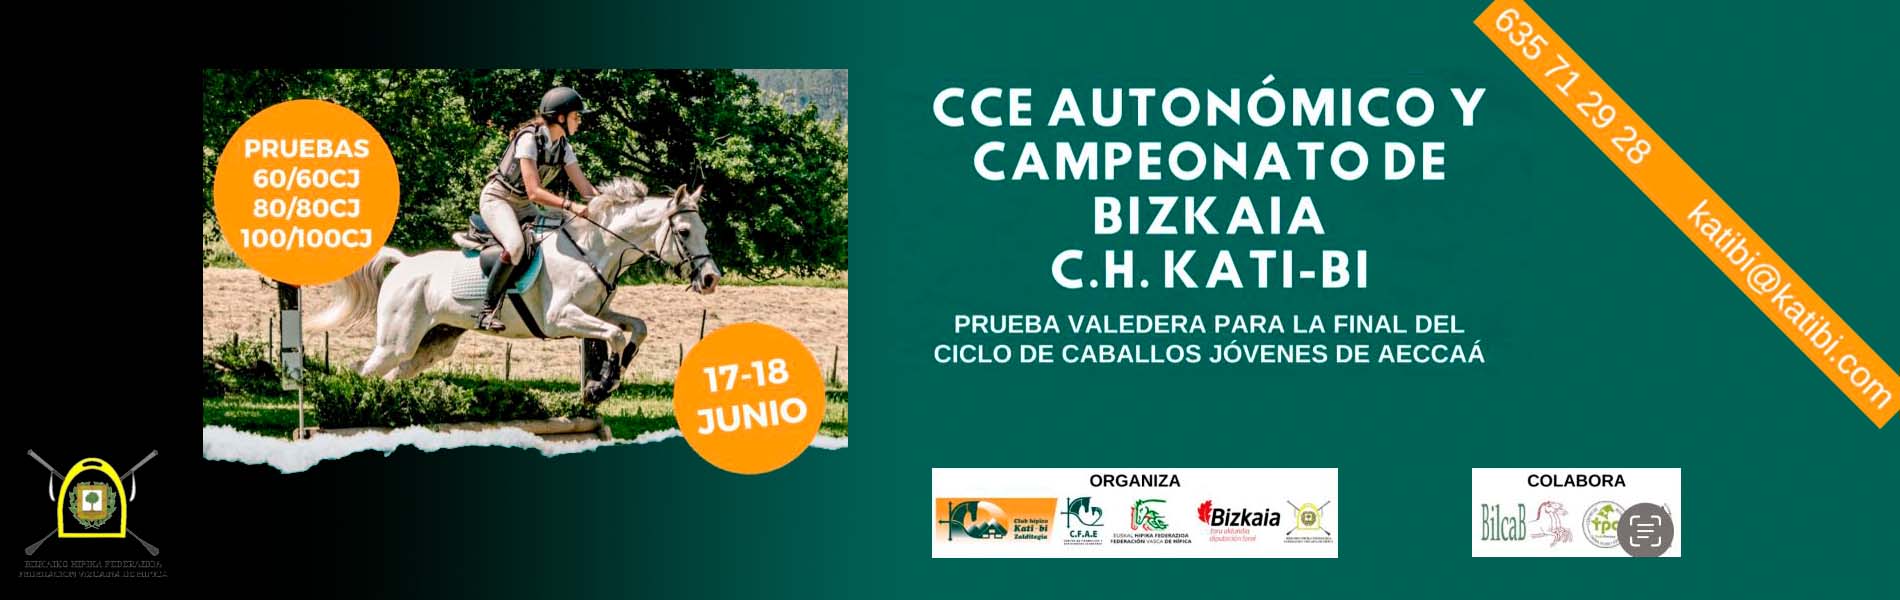 CCE Autonómico y Campeonato de Bizkaia - C.H. Kati-Bi